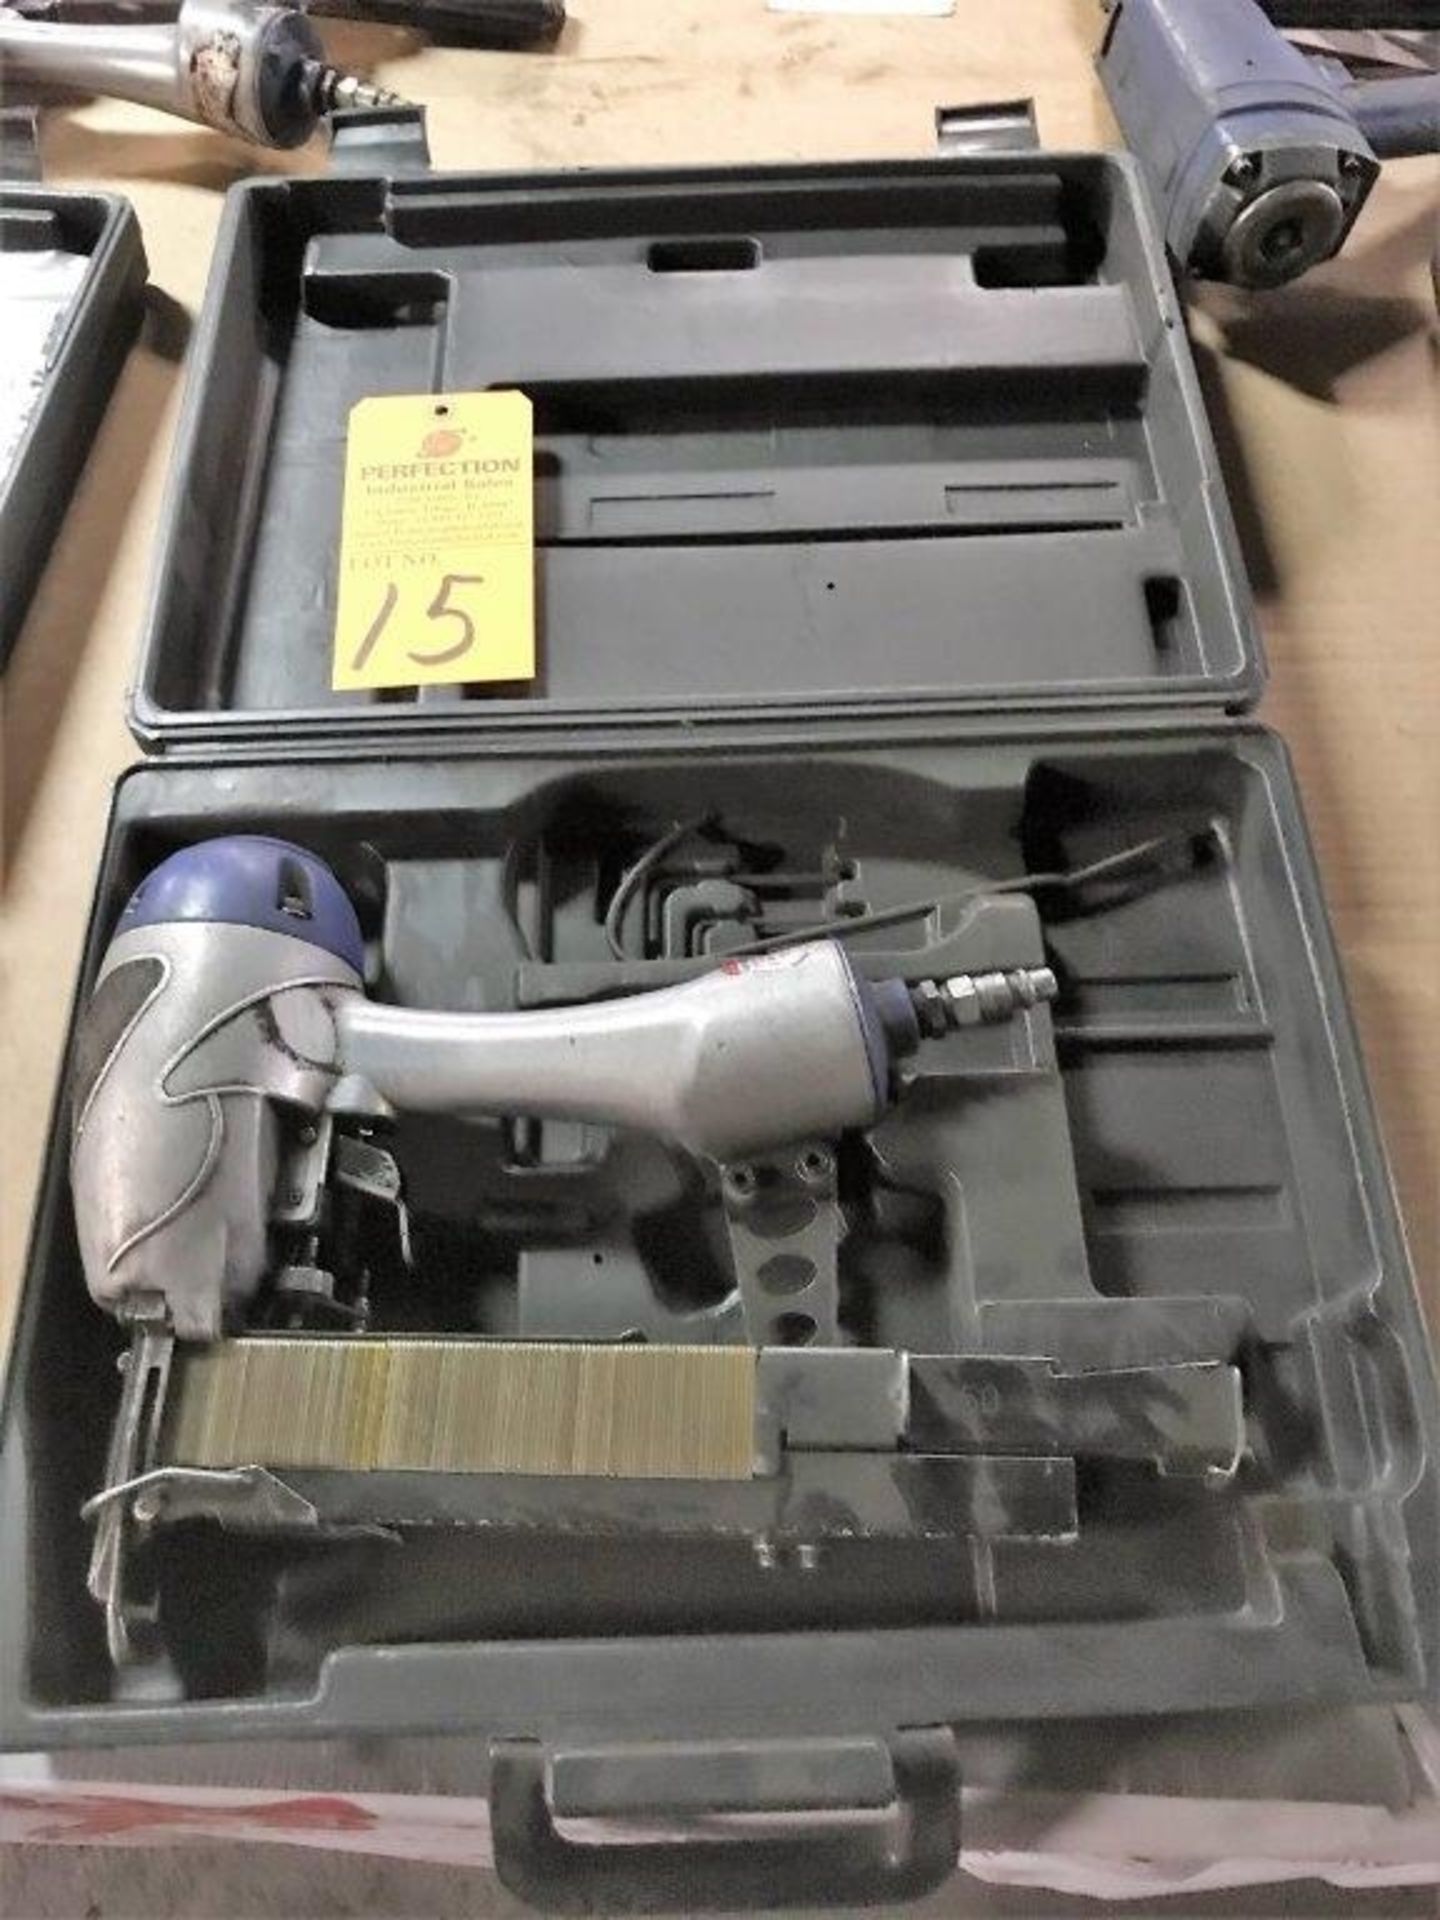 Spotnails XS3650 Pneumatic Staple Gun with Case